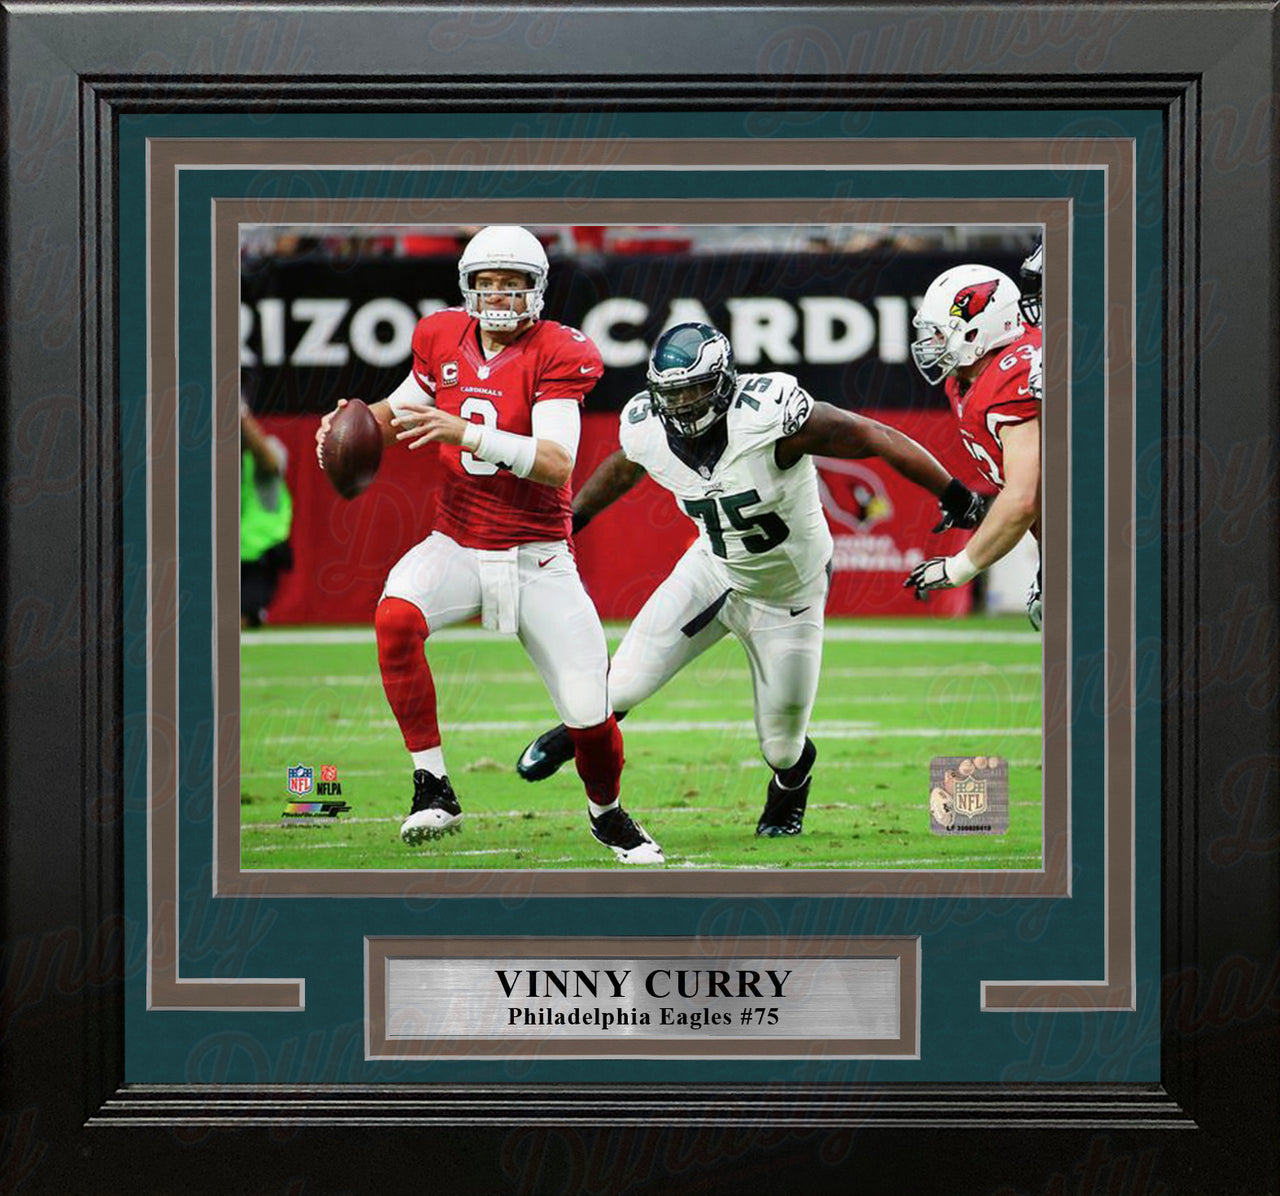 Vinny Curry in Action Philadelphia Eagles Framed Football Photo - Dynasty Sports & Framing 